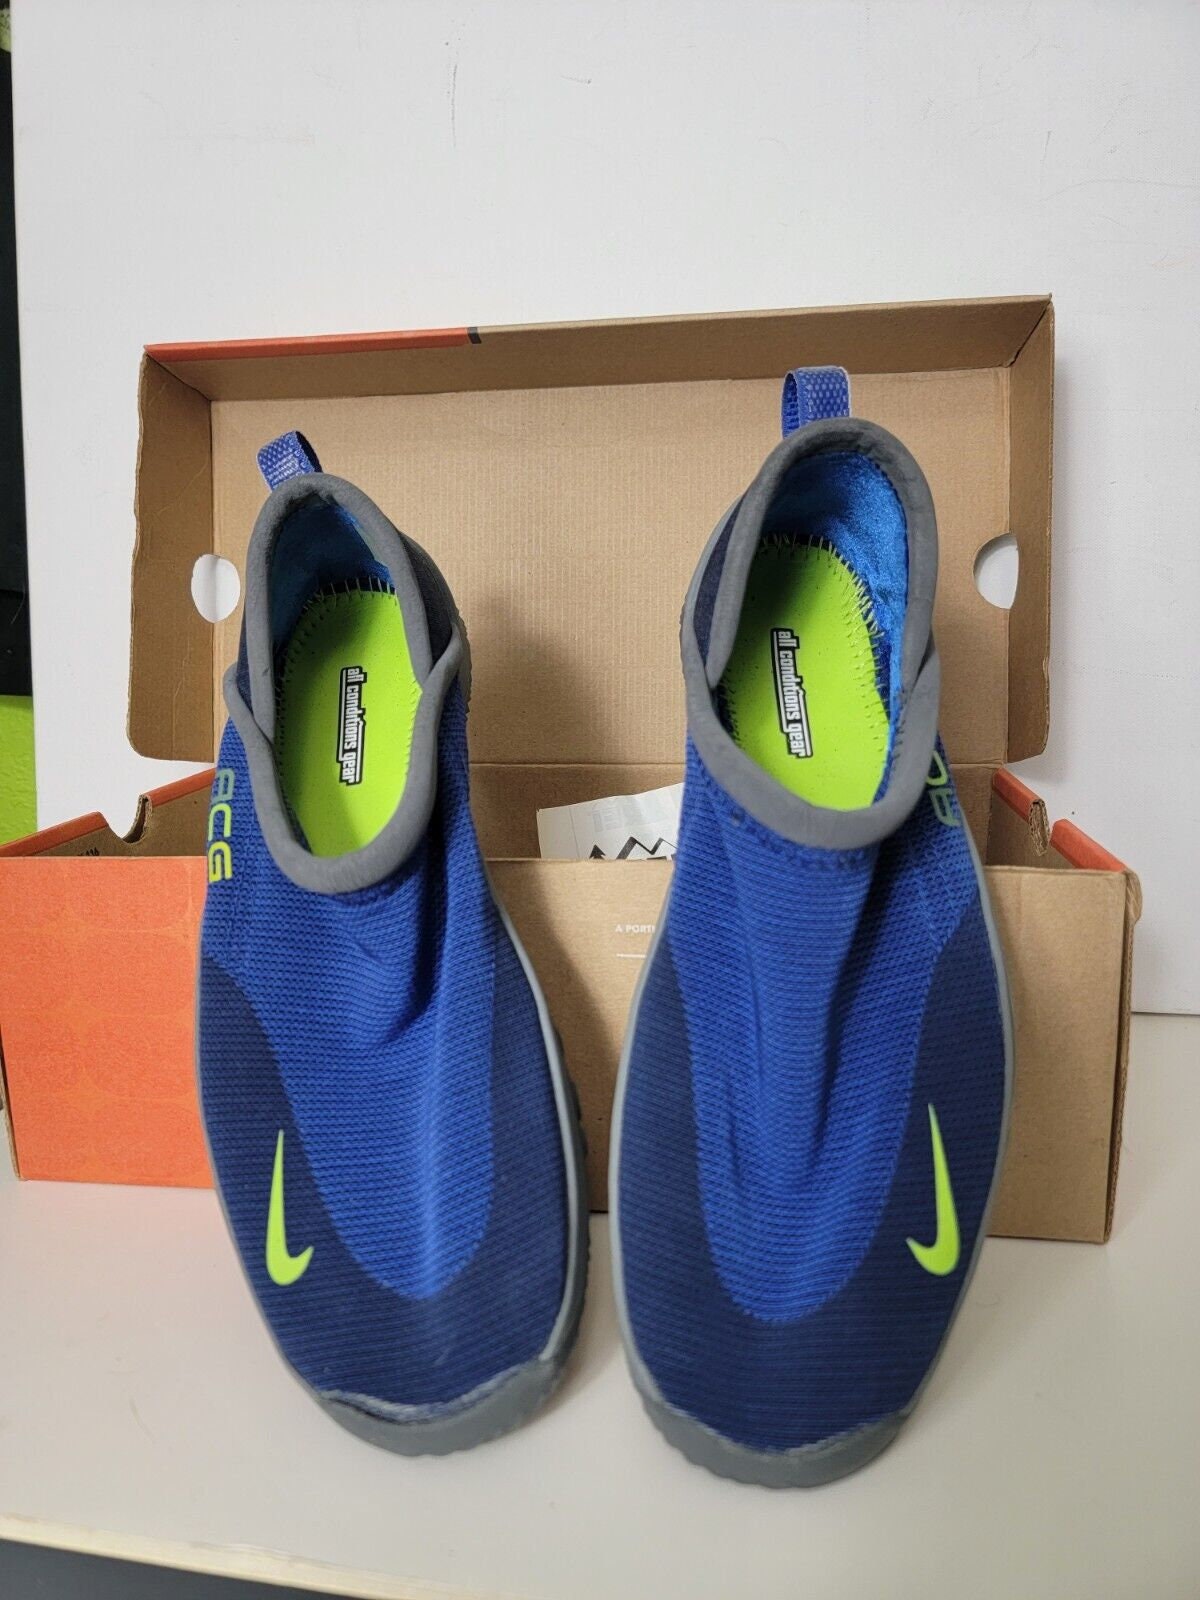 Nike Socks Aqua Custom